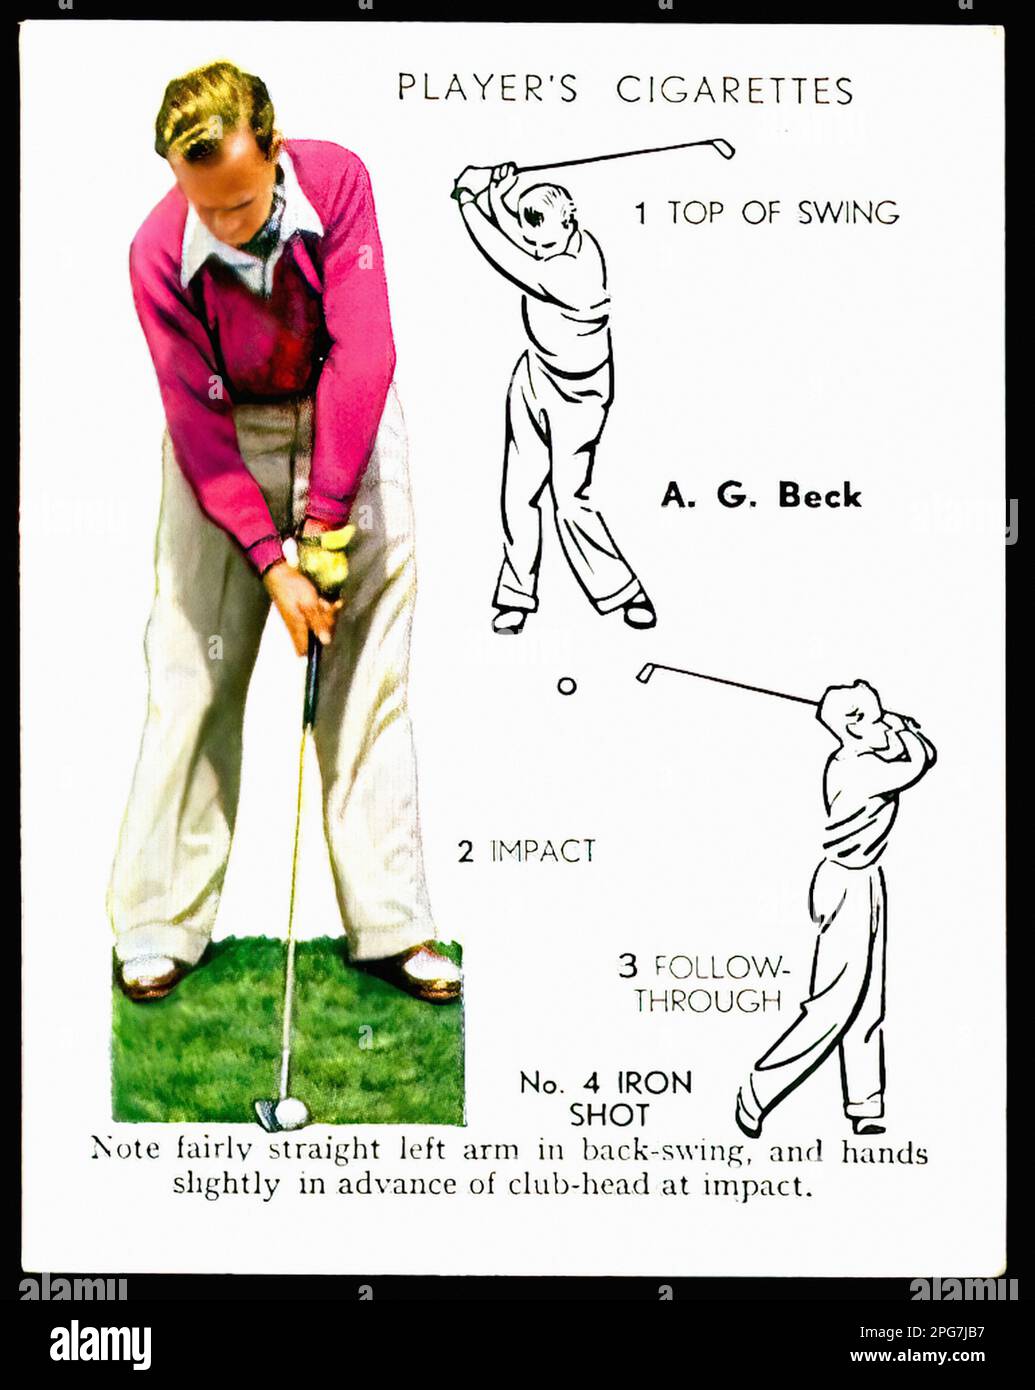 Portrait of Golfer A.G.Beck - Vintage Cigarette Card Stock Photo